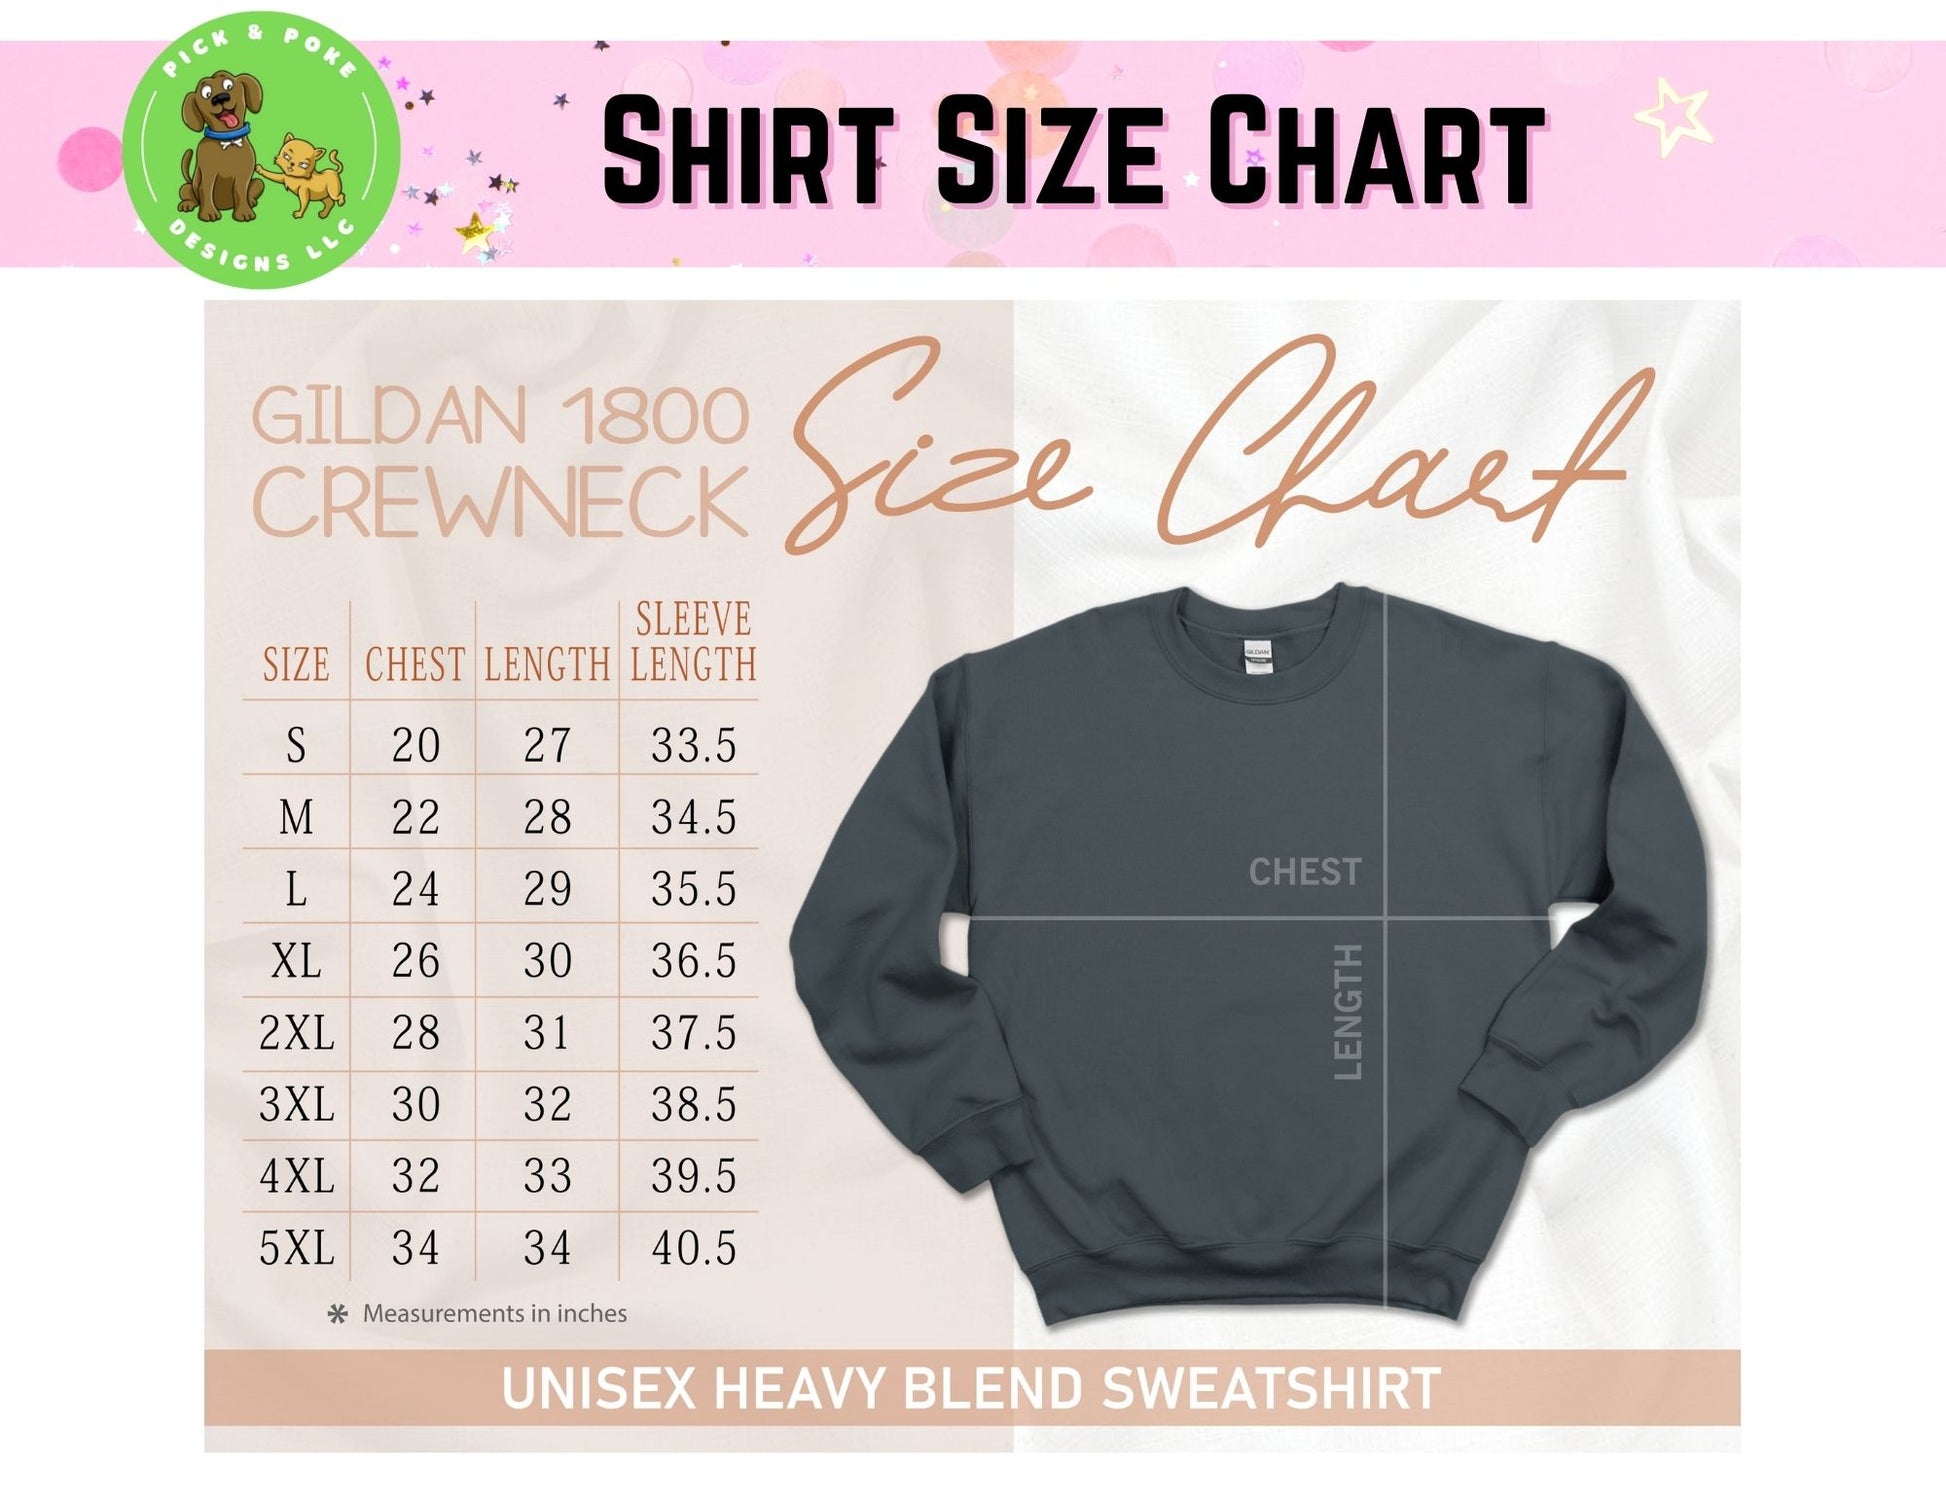 Size chart for 18000 Gildan crewneck unisex heavy blend sweatshirts.